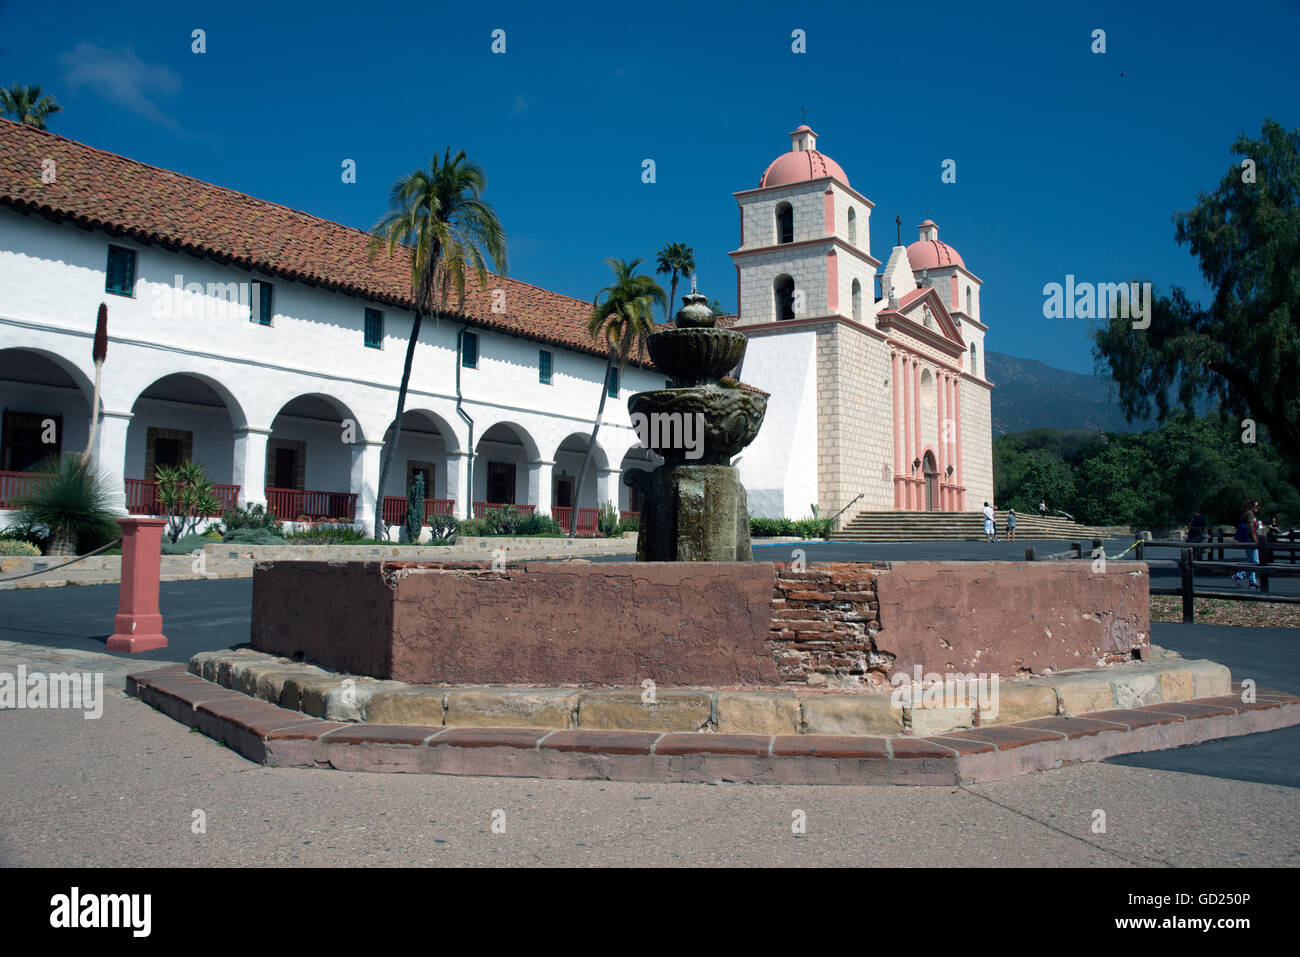 Mission Santa Barbara, gegründet 1786, Santa Barbara, California, Vereinigte Staaten von Amerika, Nordamerika Stockfoto